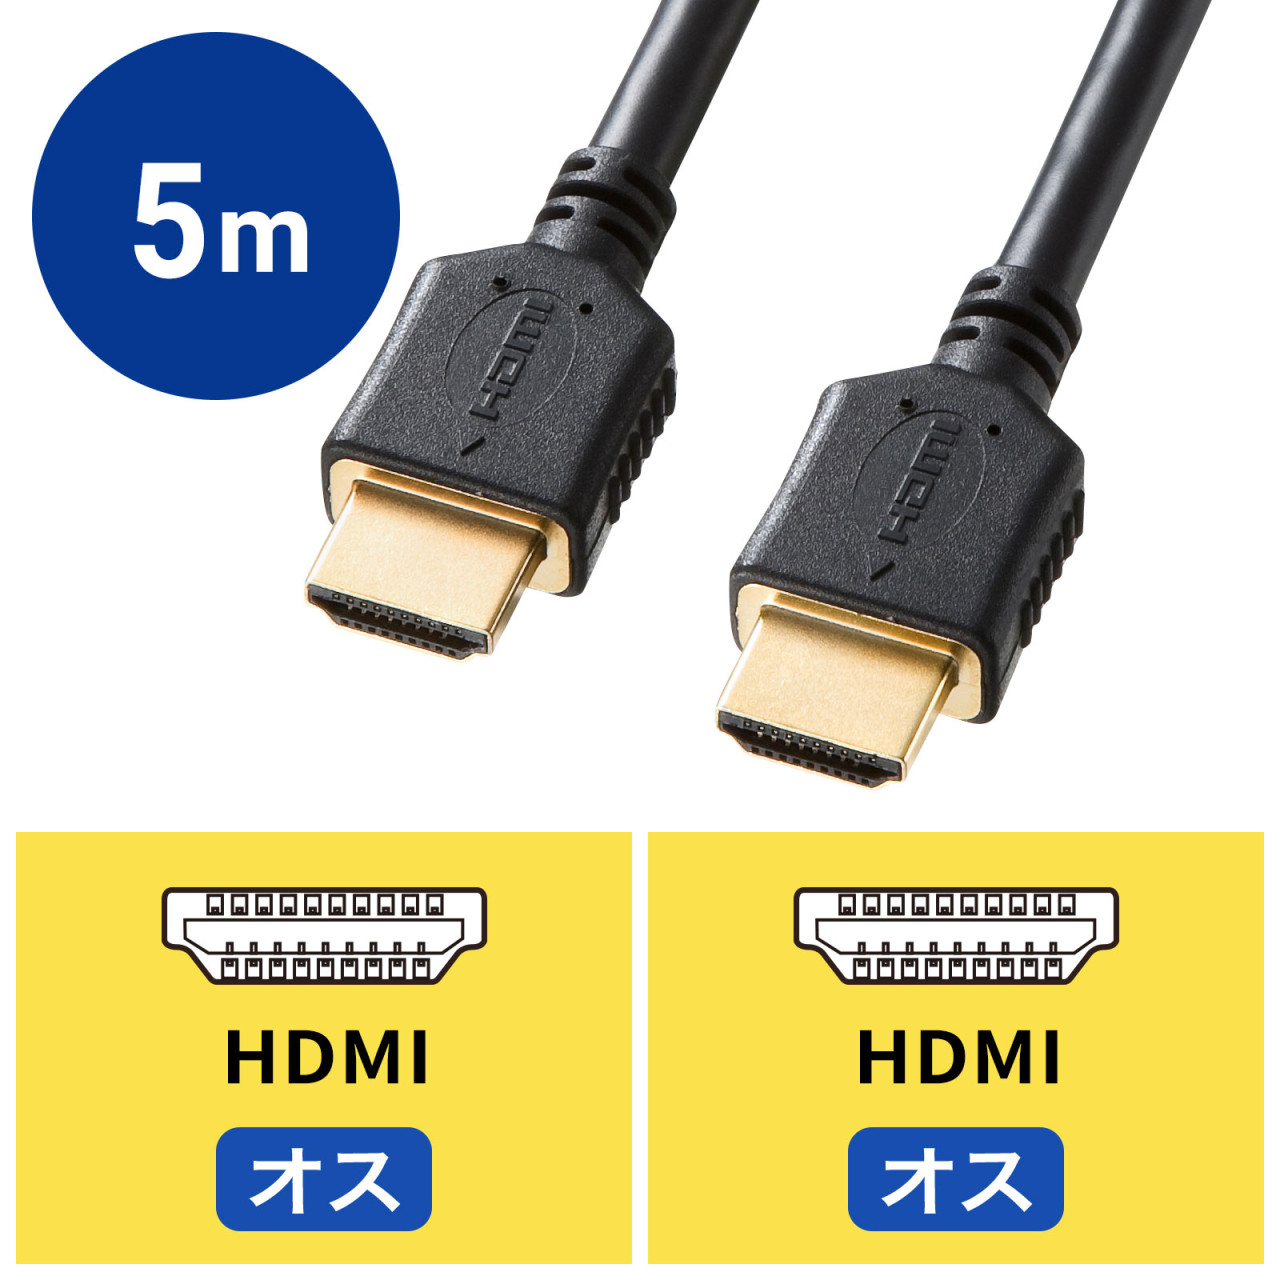 HDMIケーブル5m KM-HD20-P50